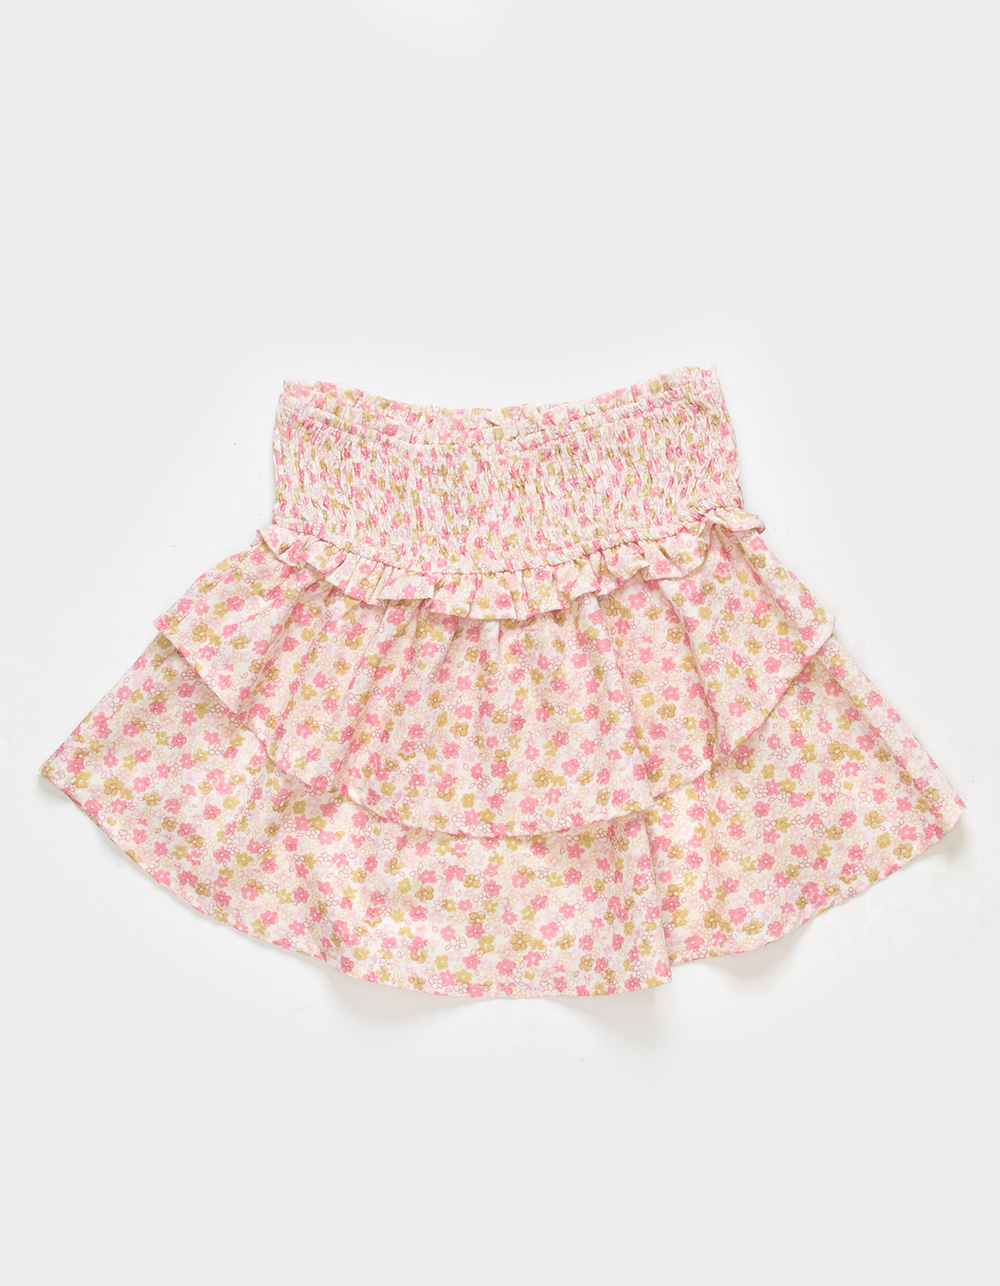 HAYDEN Ditsy Floral Girls Smocked Tiered Skirt - PINK COMBO | Tillys